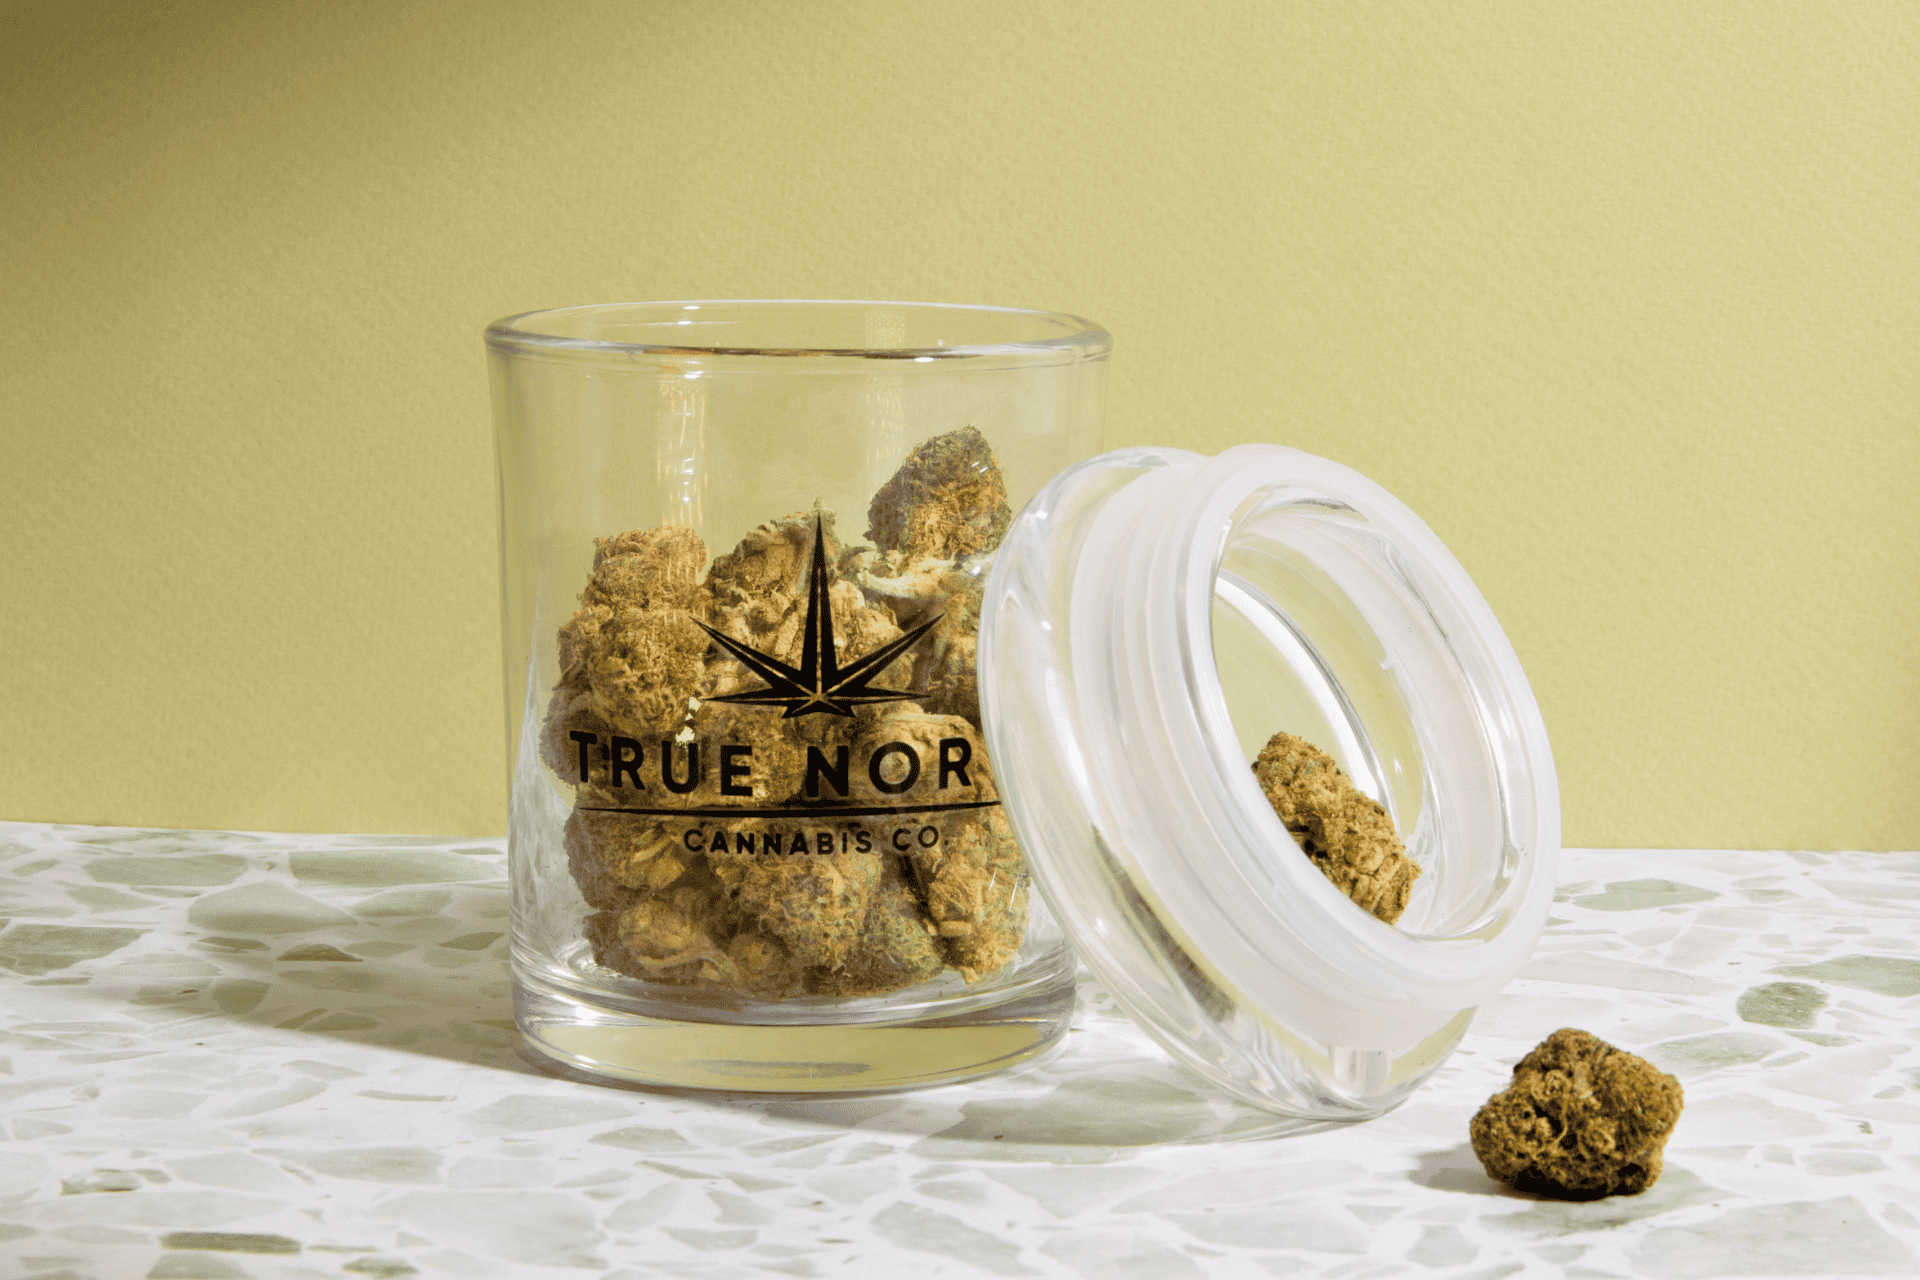 A True North Cannabis Co. stash jar filled with cannabis buds